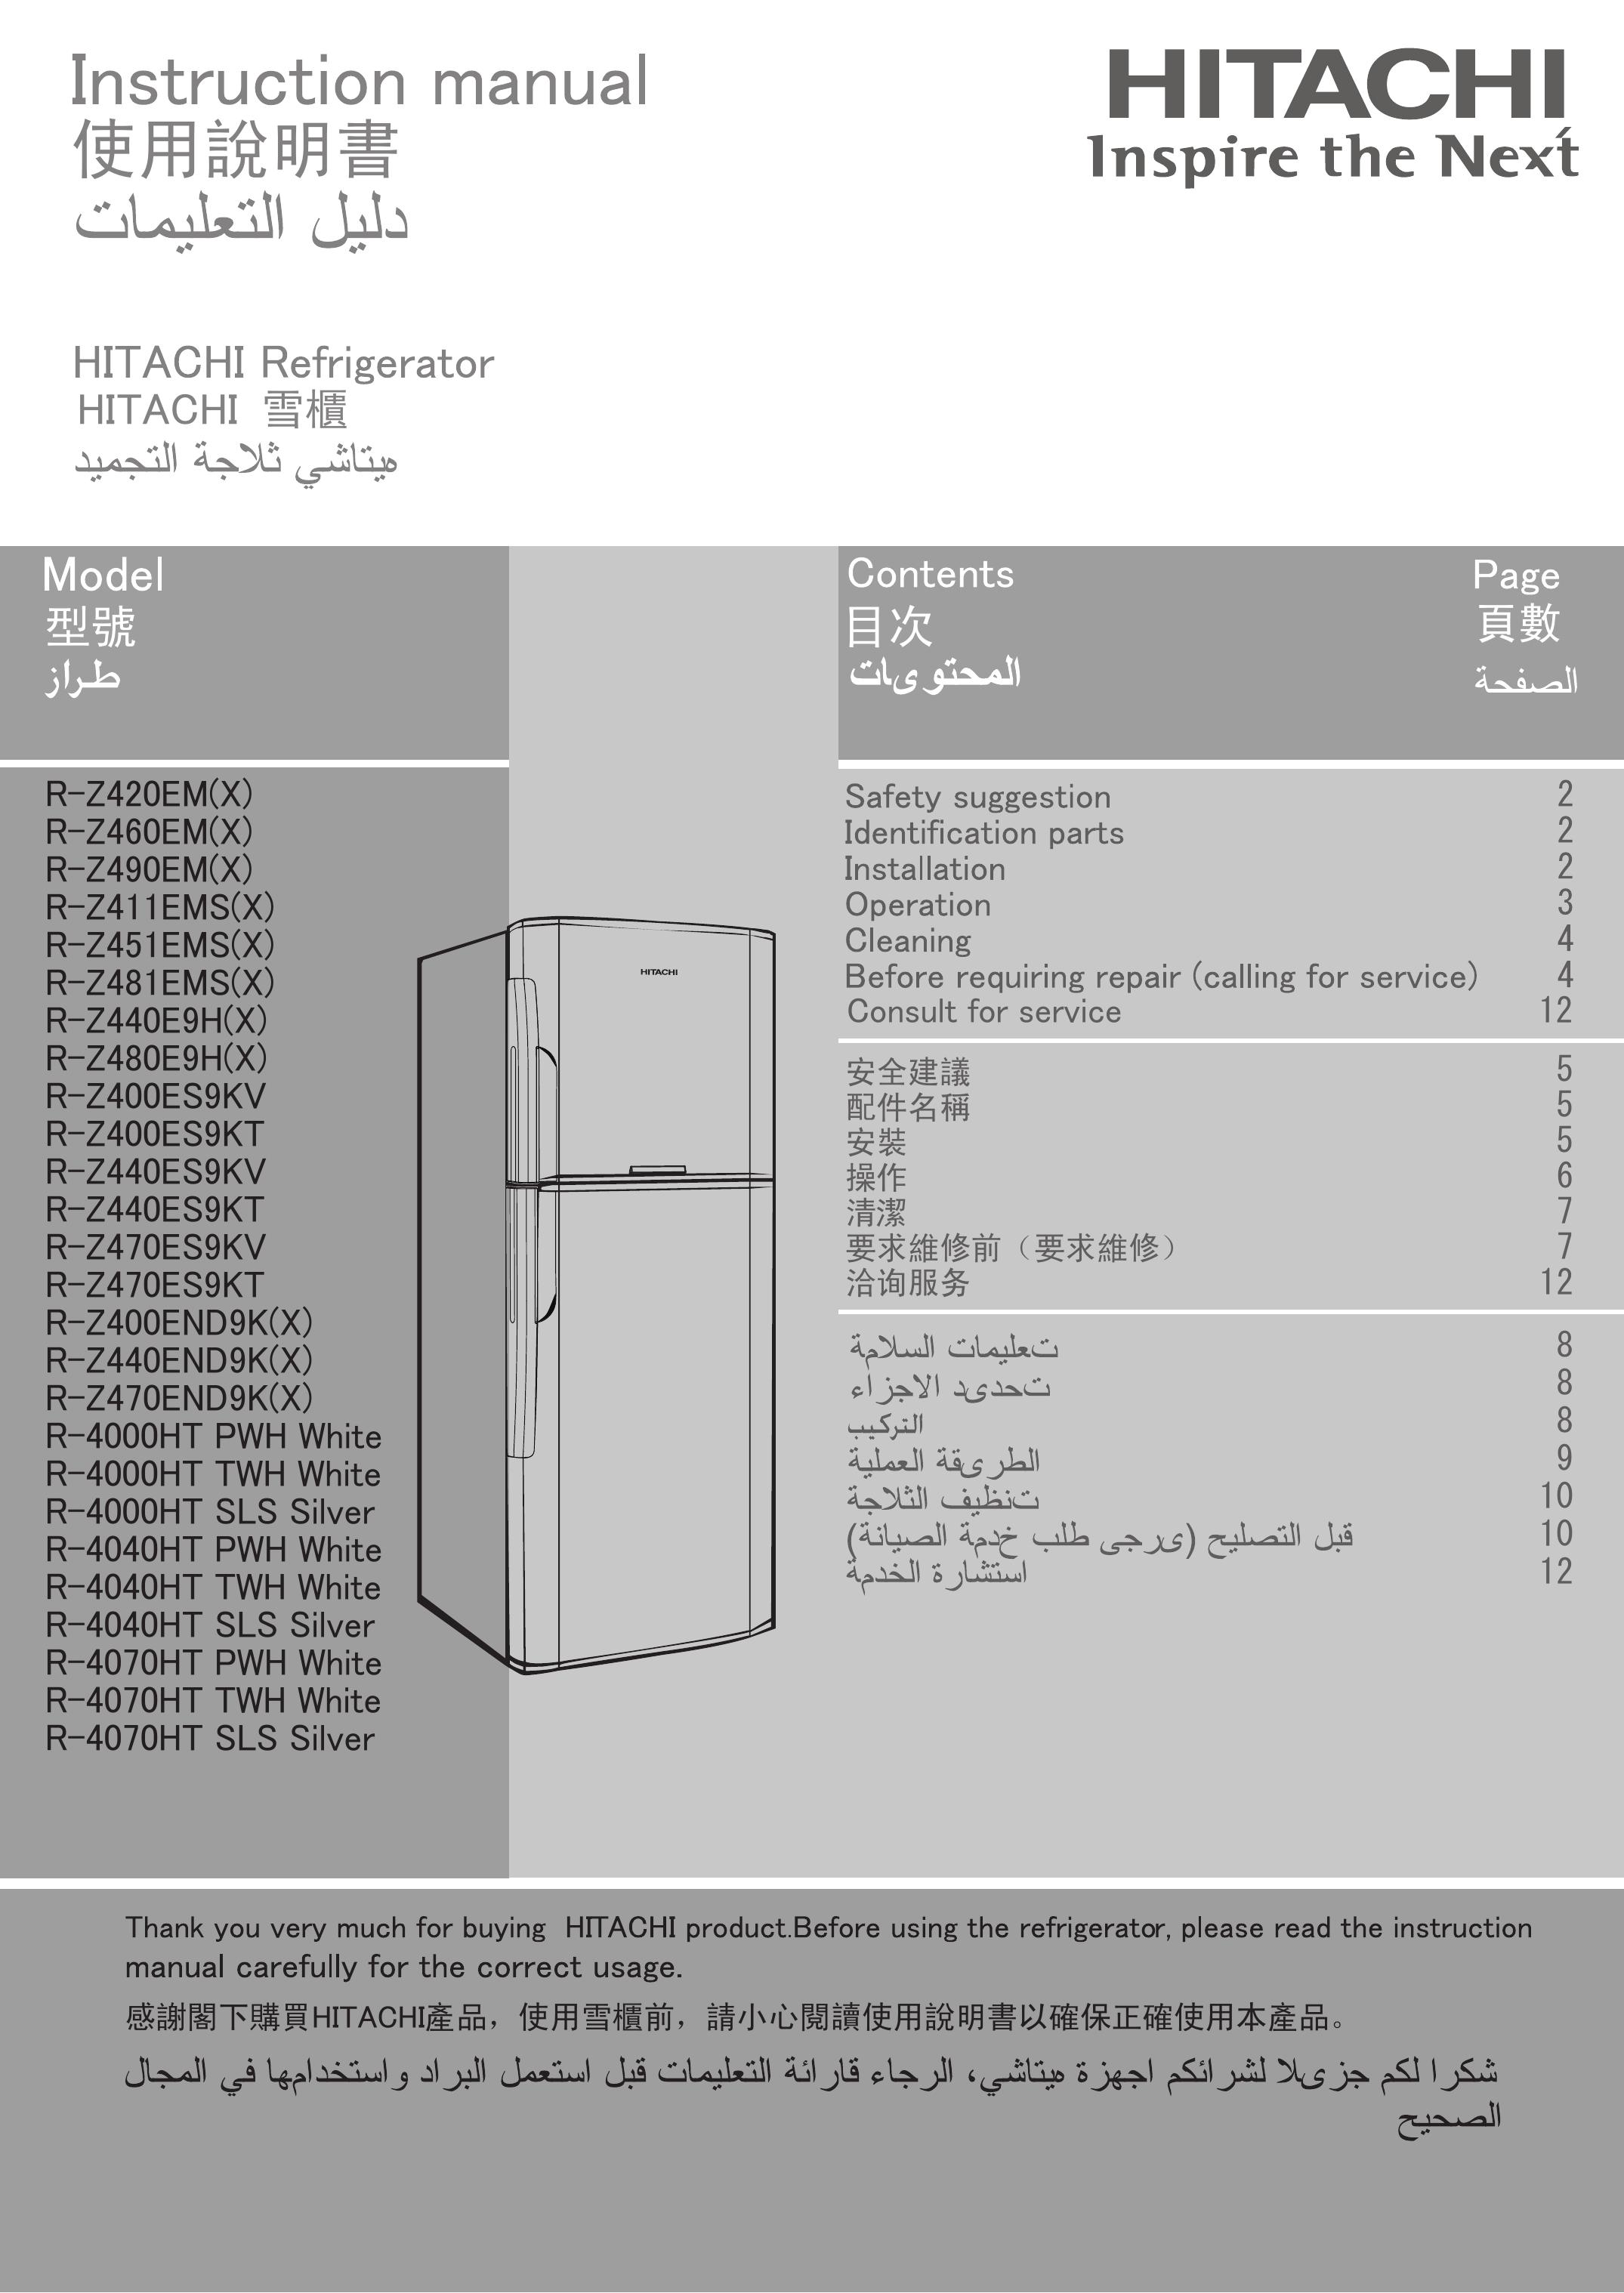 Hitachi R-4000HT PWH White Refrigerator User Manual